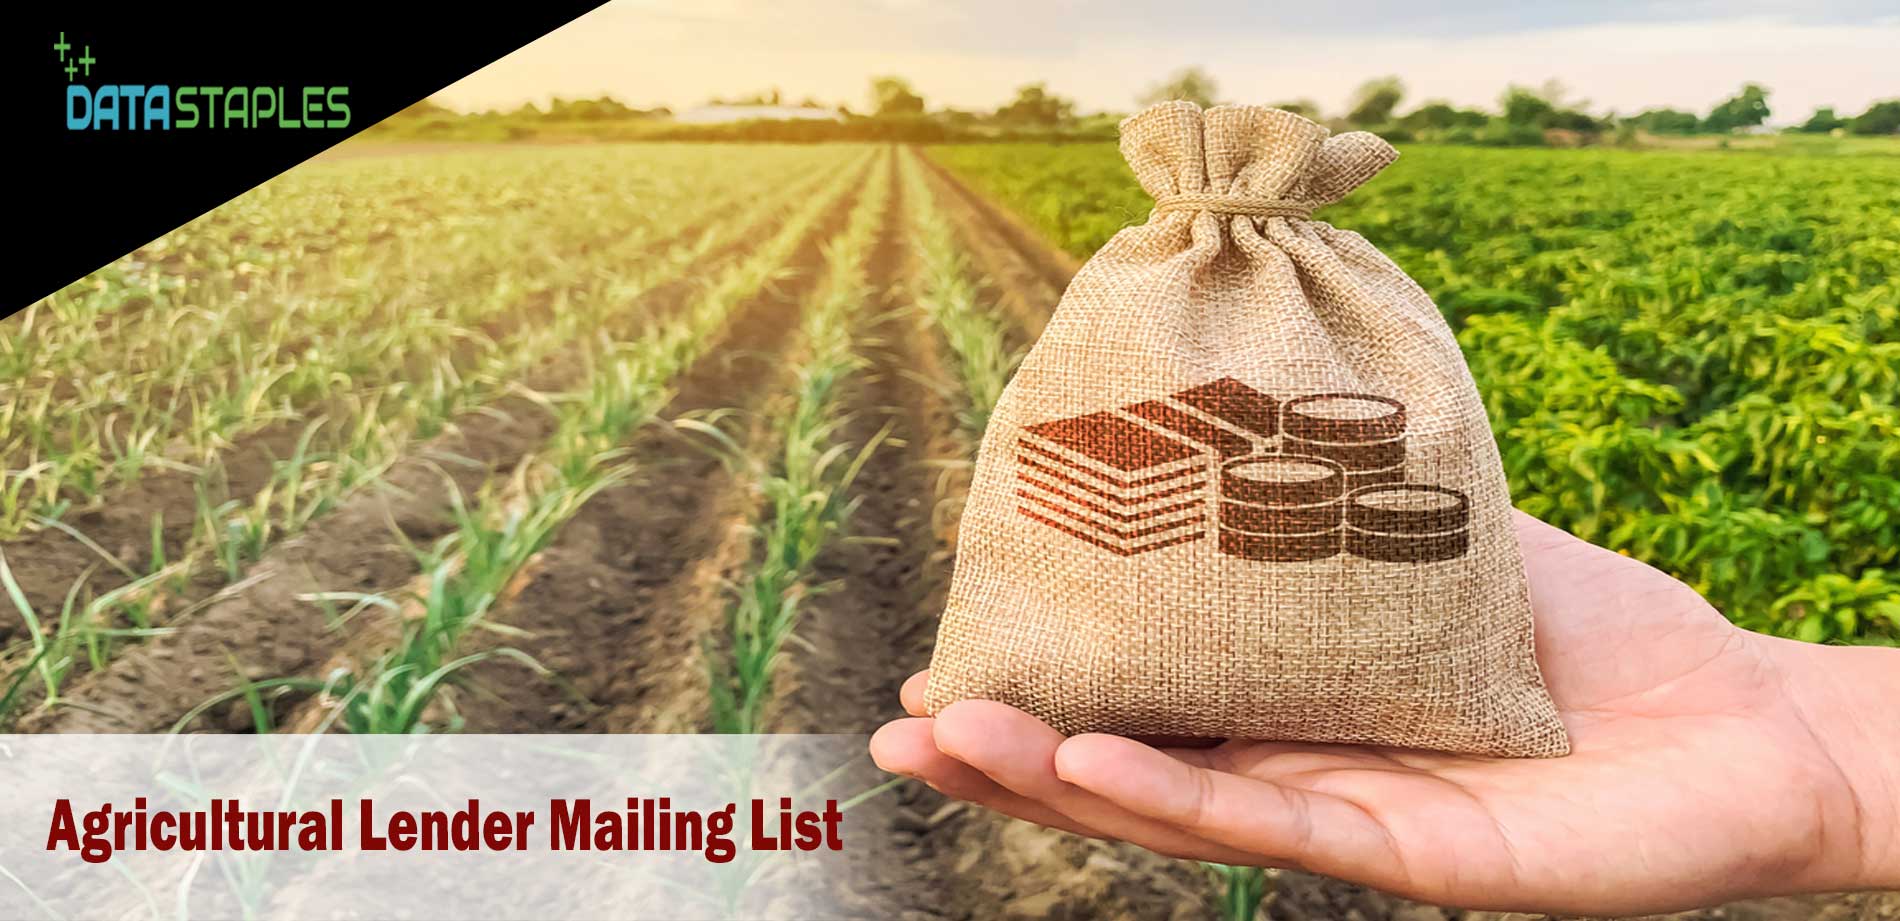 Agriculture Lender Mailing List | DataStaples